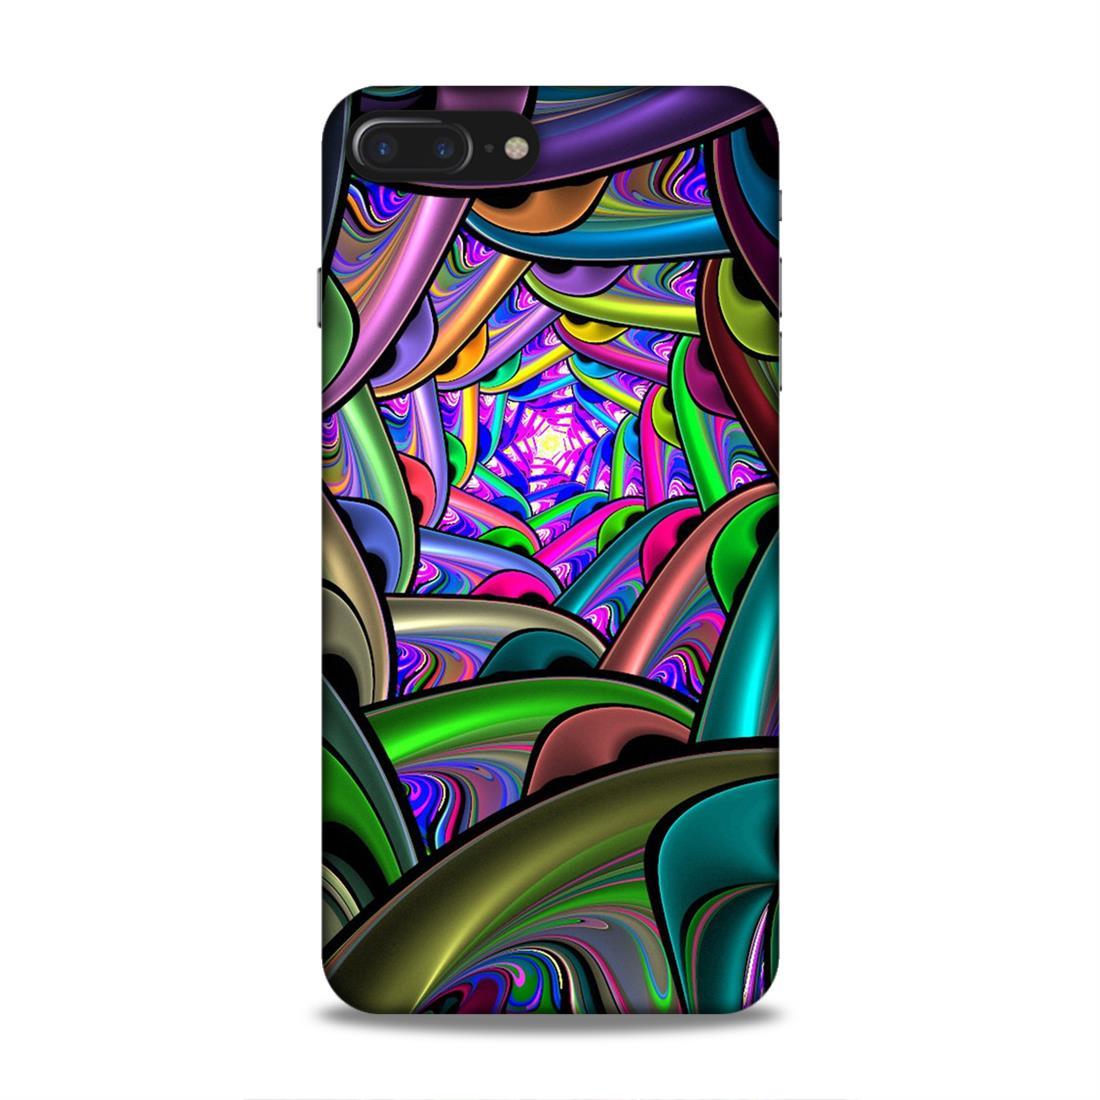 Deep Multicolour iPhone 8 Plus Mobile Cover